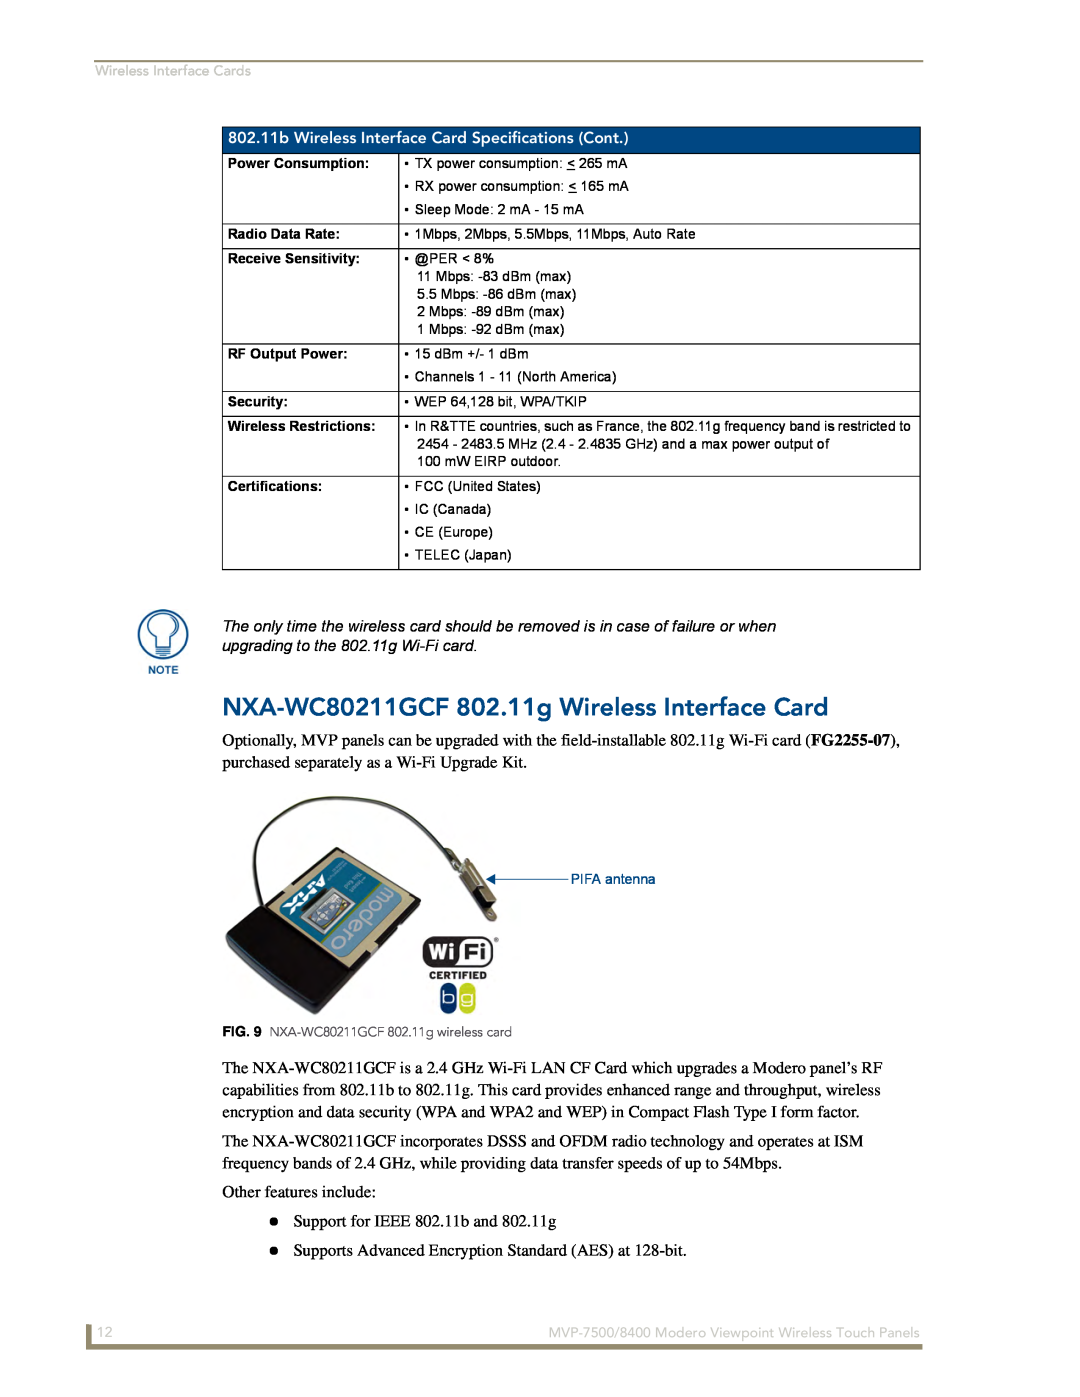 AMX MVP-8400i manual NXA-WC80211GCF 802.11g Wireless Interface Card, 802.11b Wireless Interface Card Specifications Cont 